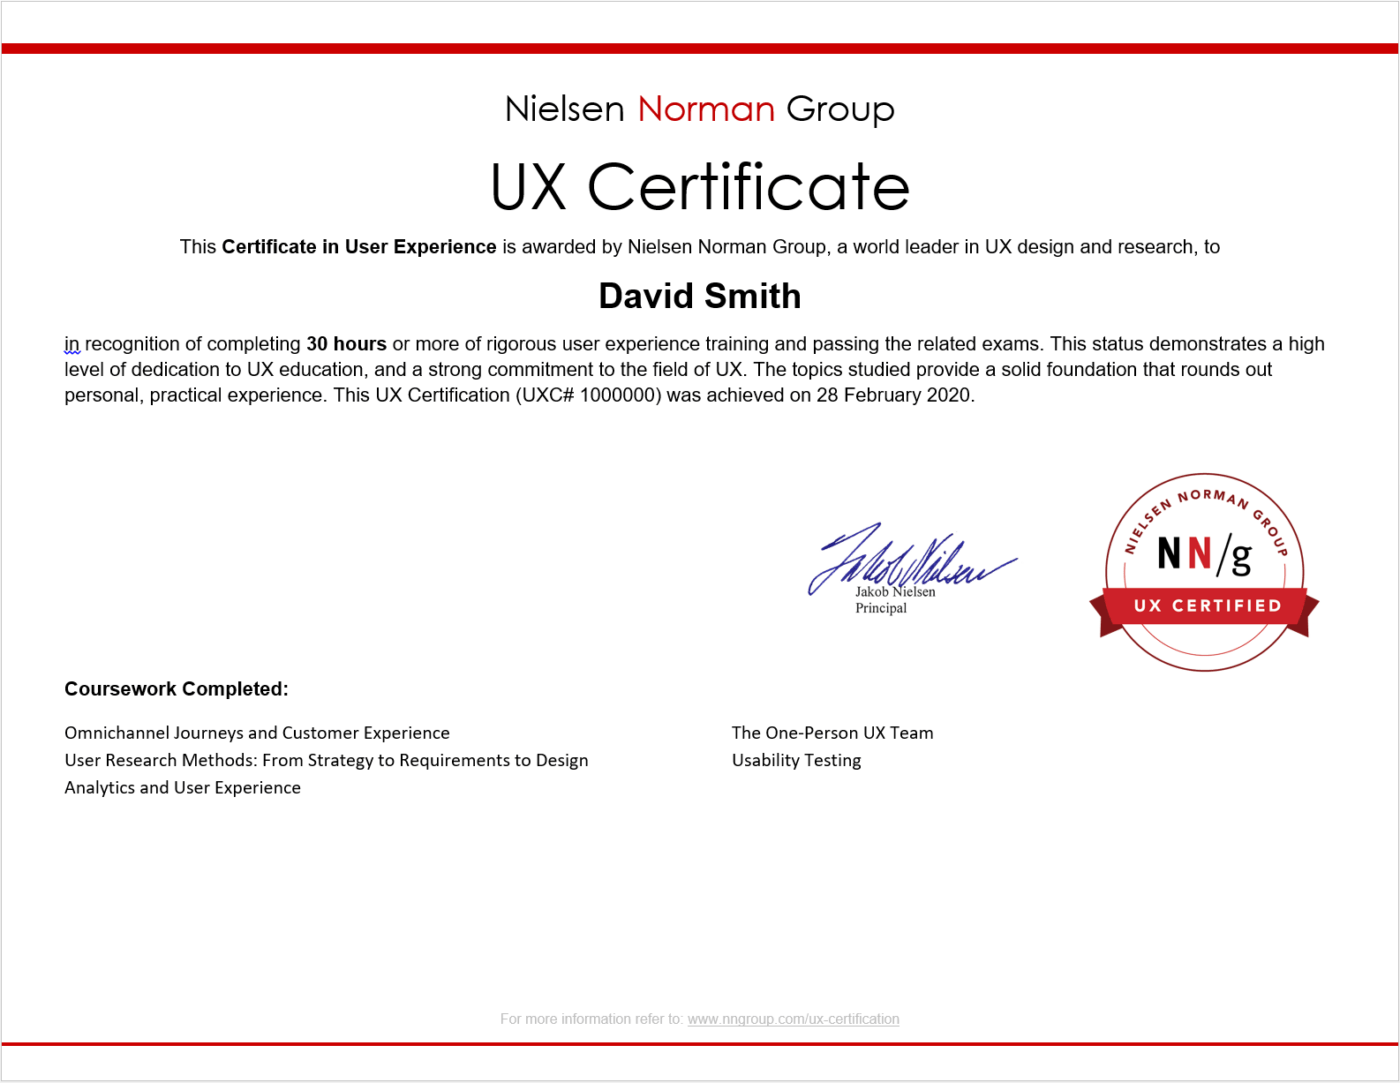 UX Certificate Nielsen Norman Group